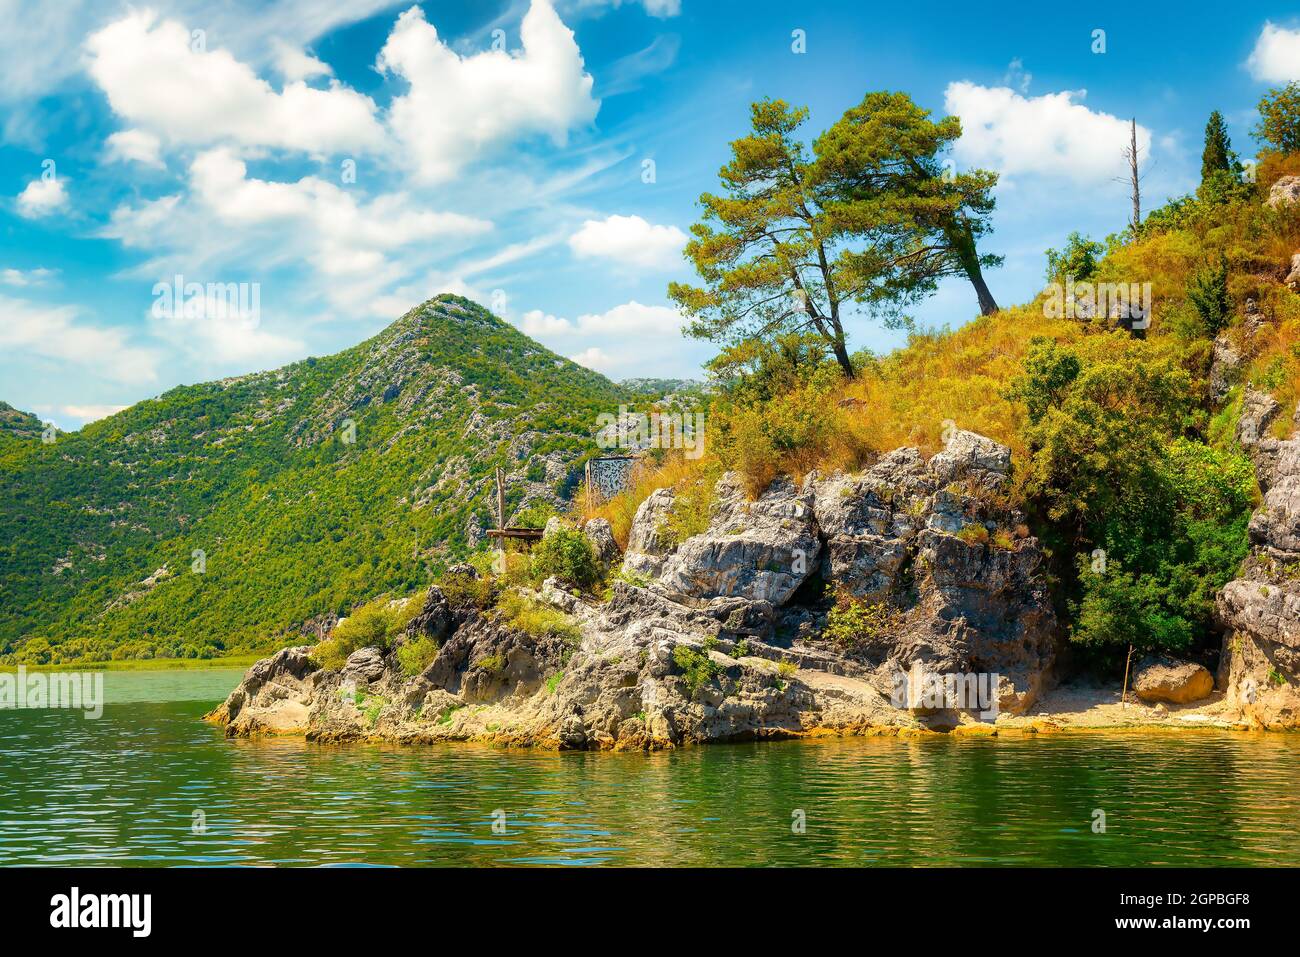 Rijeka Crnojevica. Vue imprenable sur Rijeka Crnojevica. Parc national du lac Skadar, Monténégro Banque D'Images